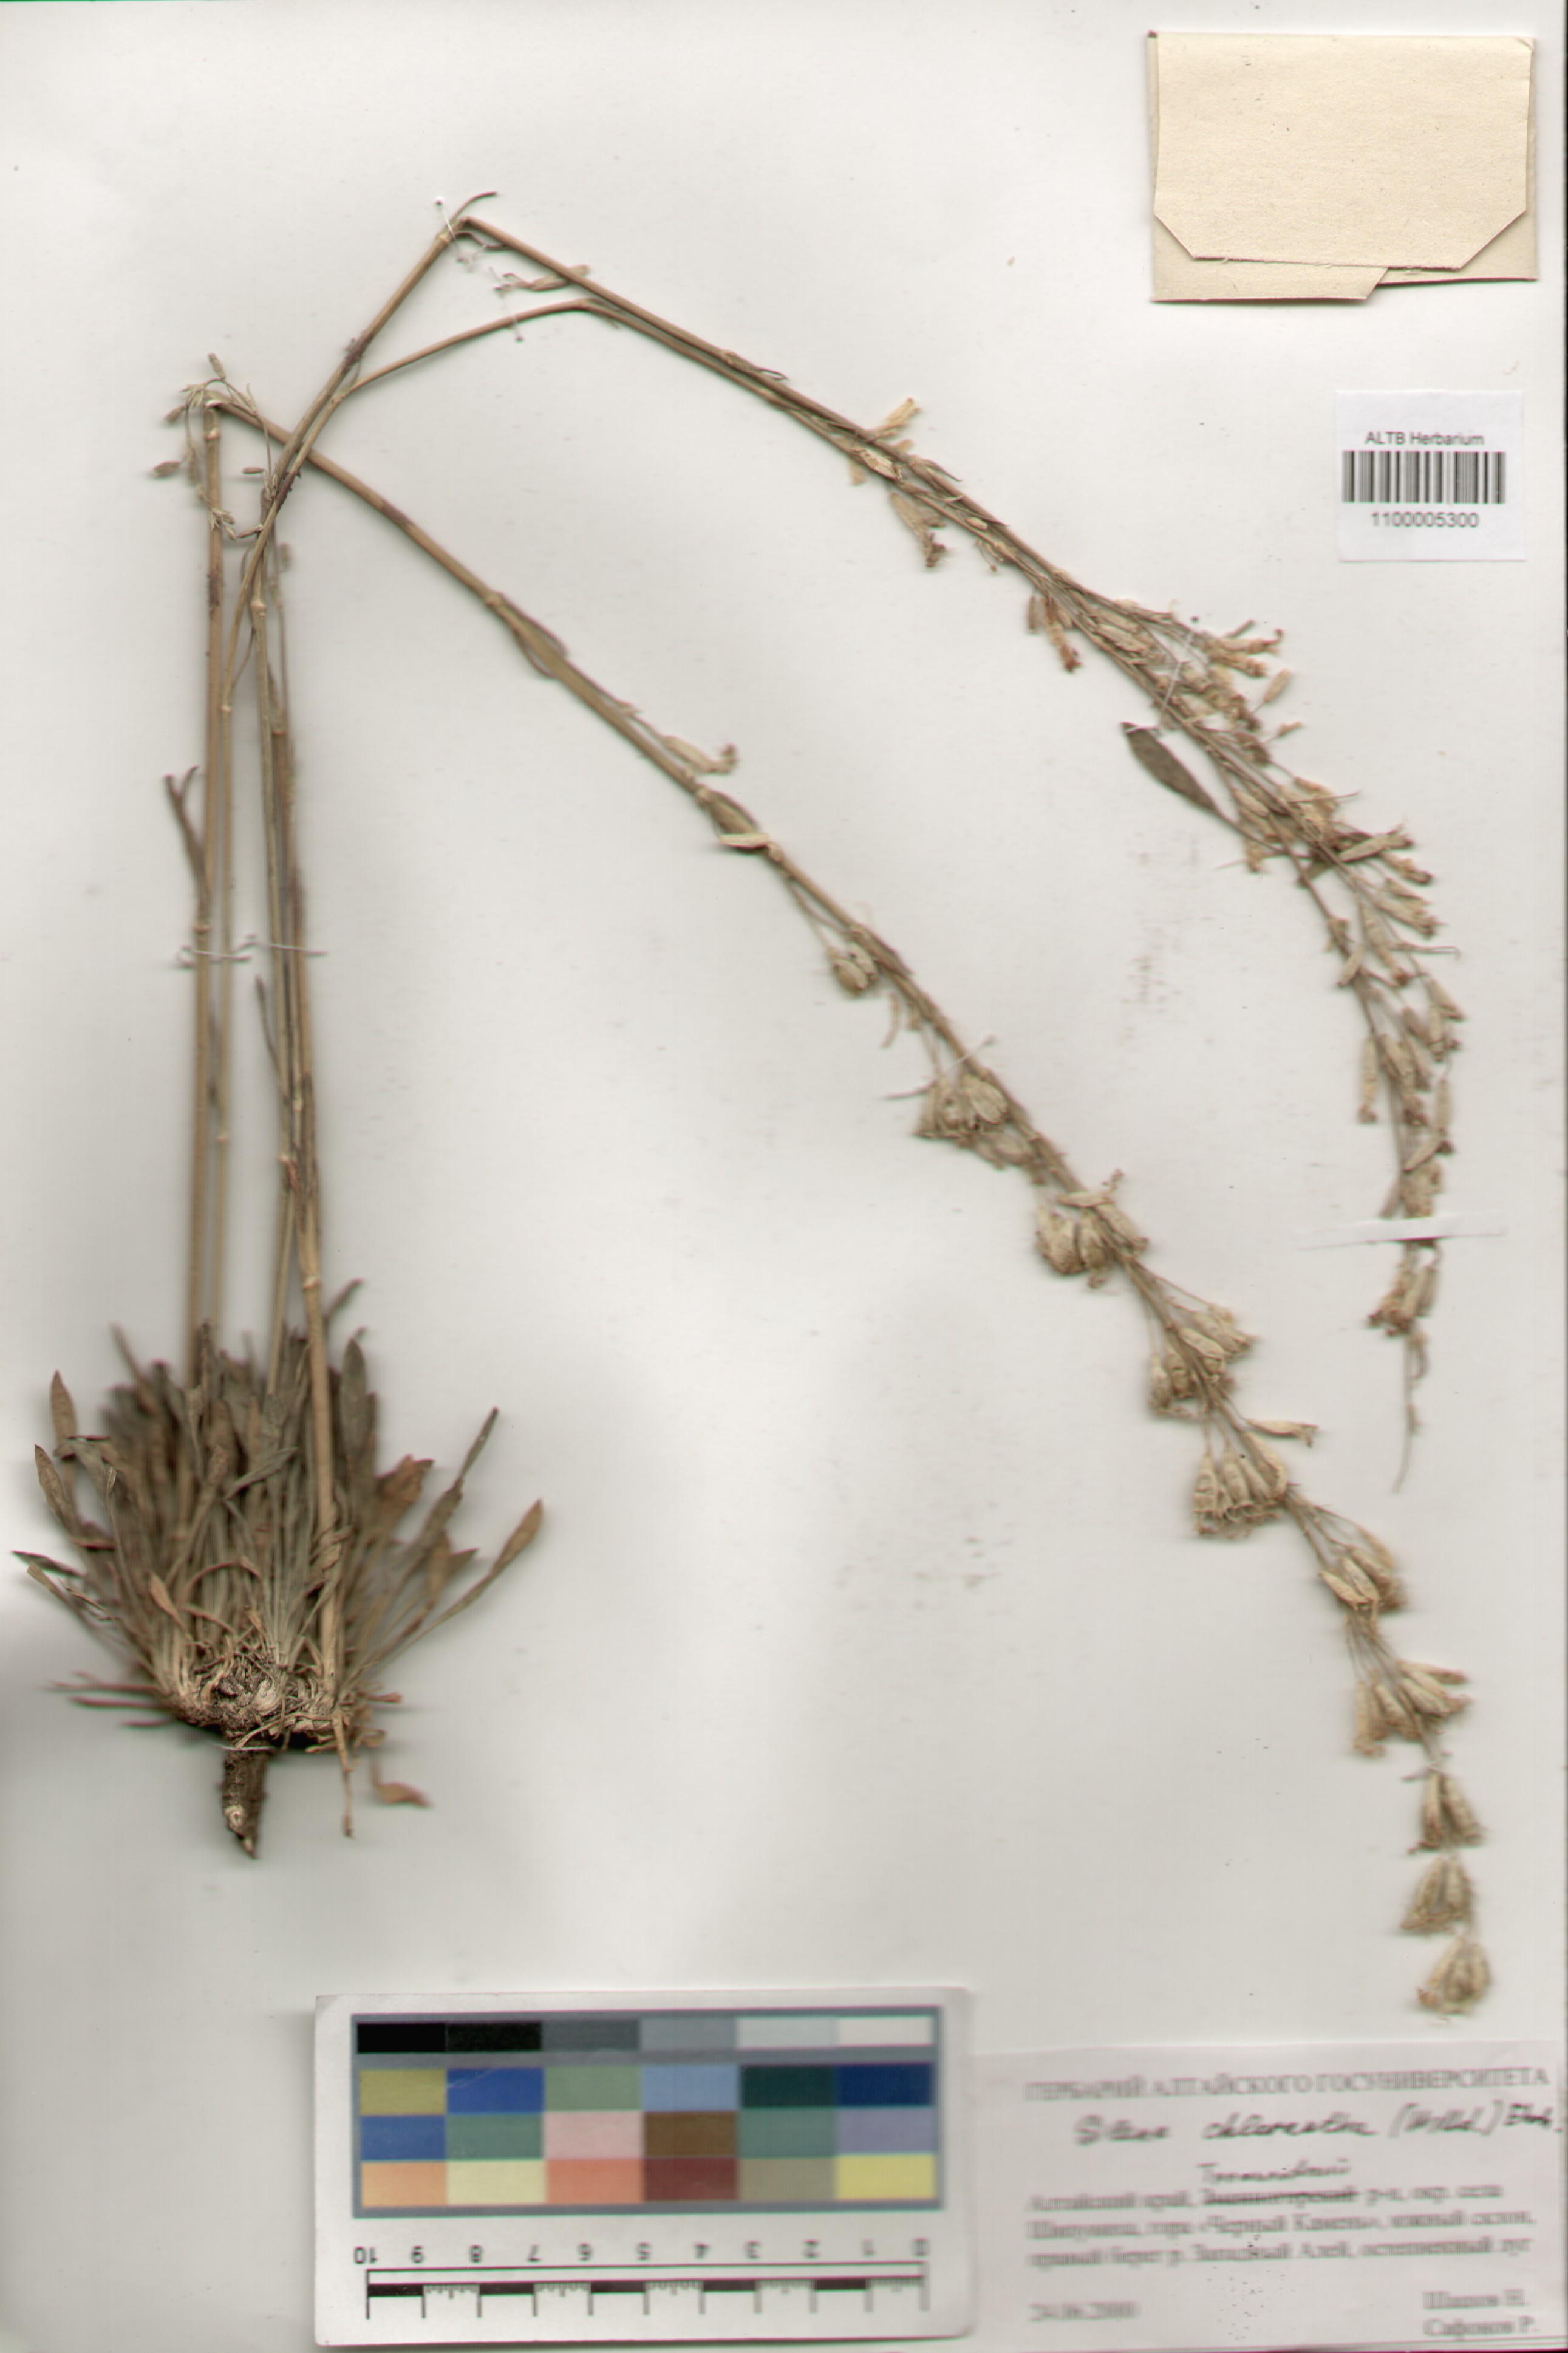 Caryophyllaceae,Silene chlorantha (Willd.) Ehrh.